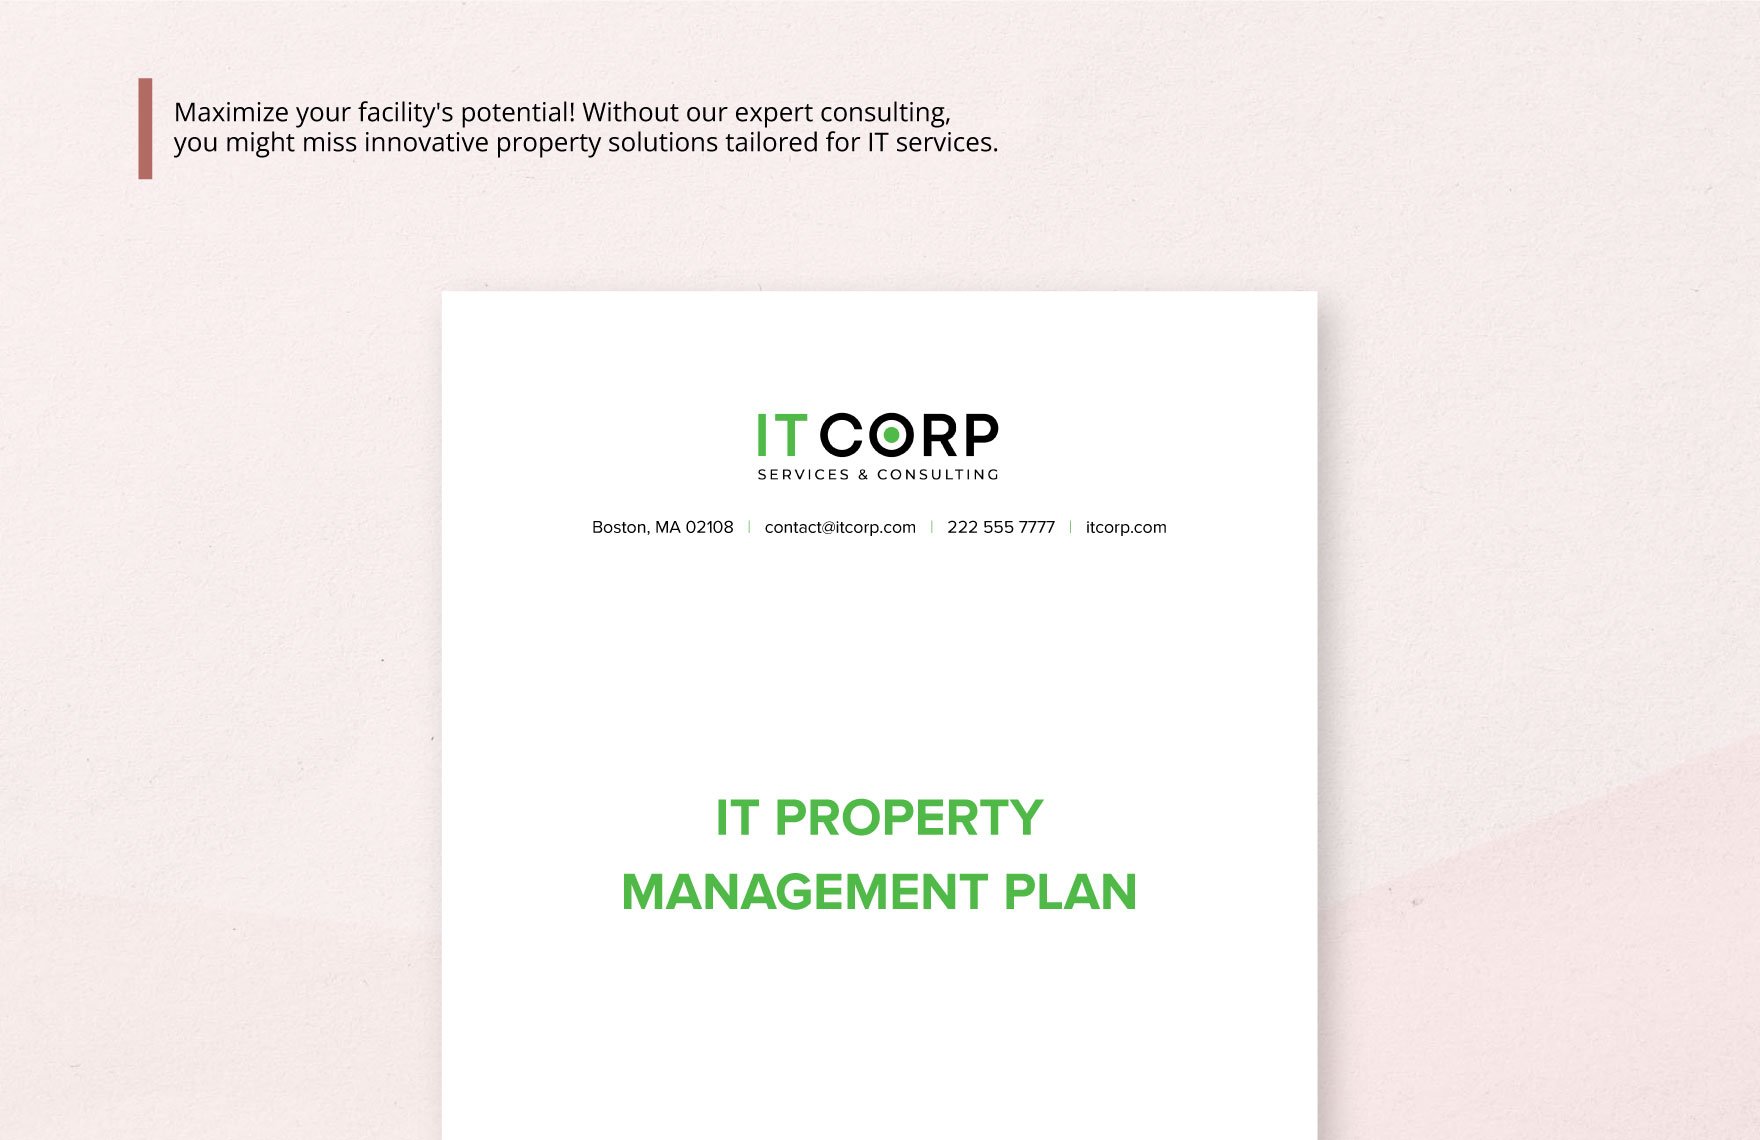 IT Property Management Plan Template